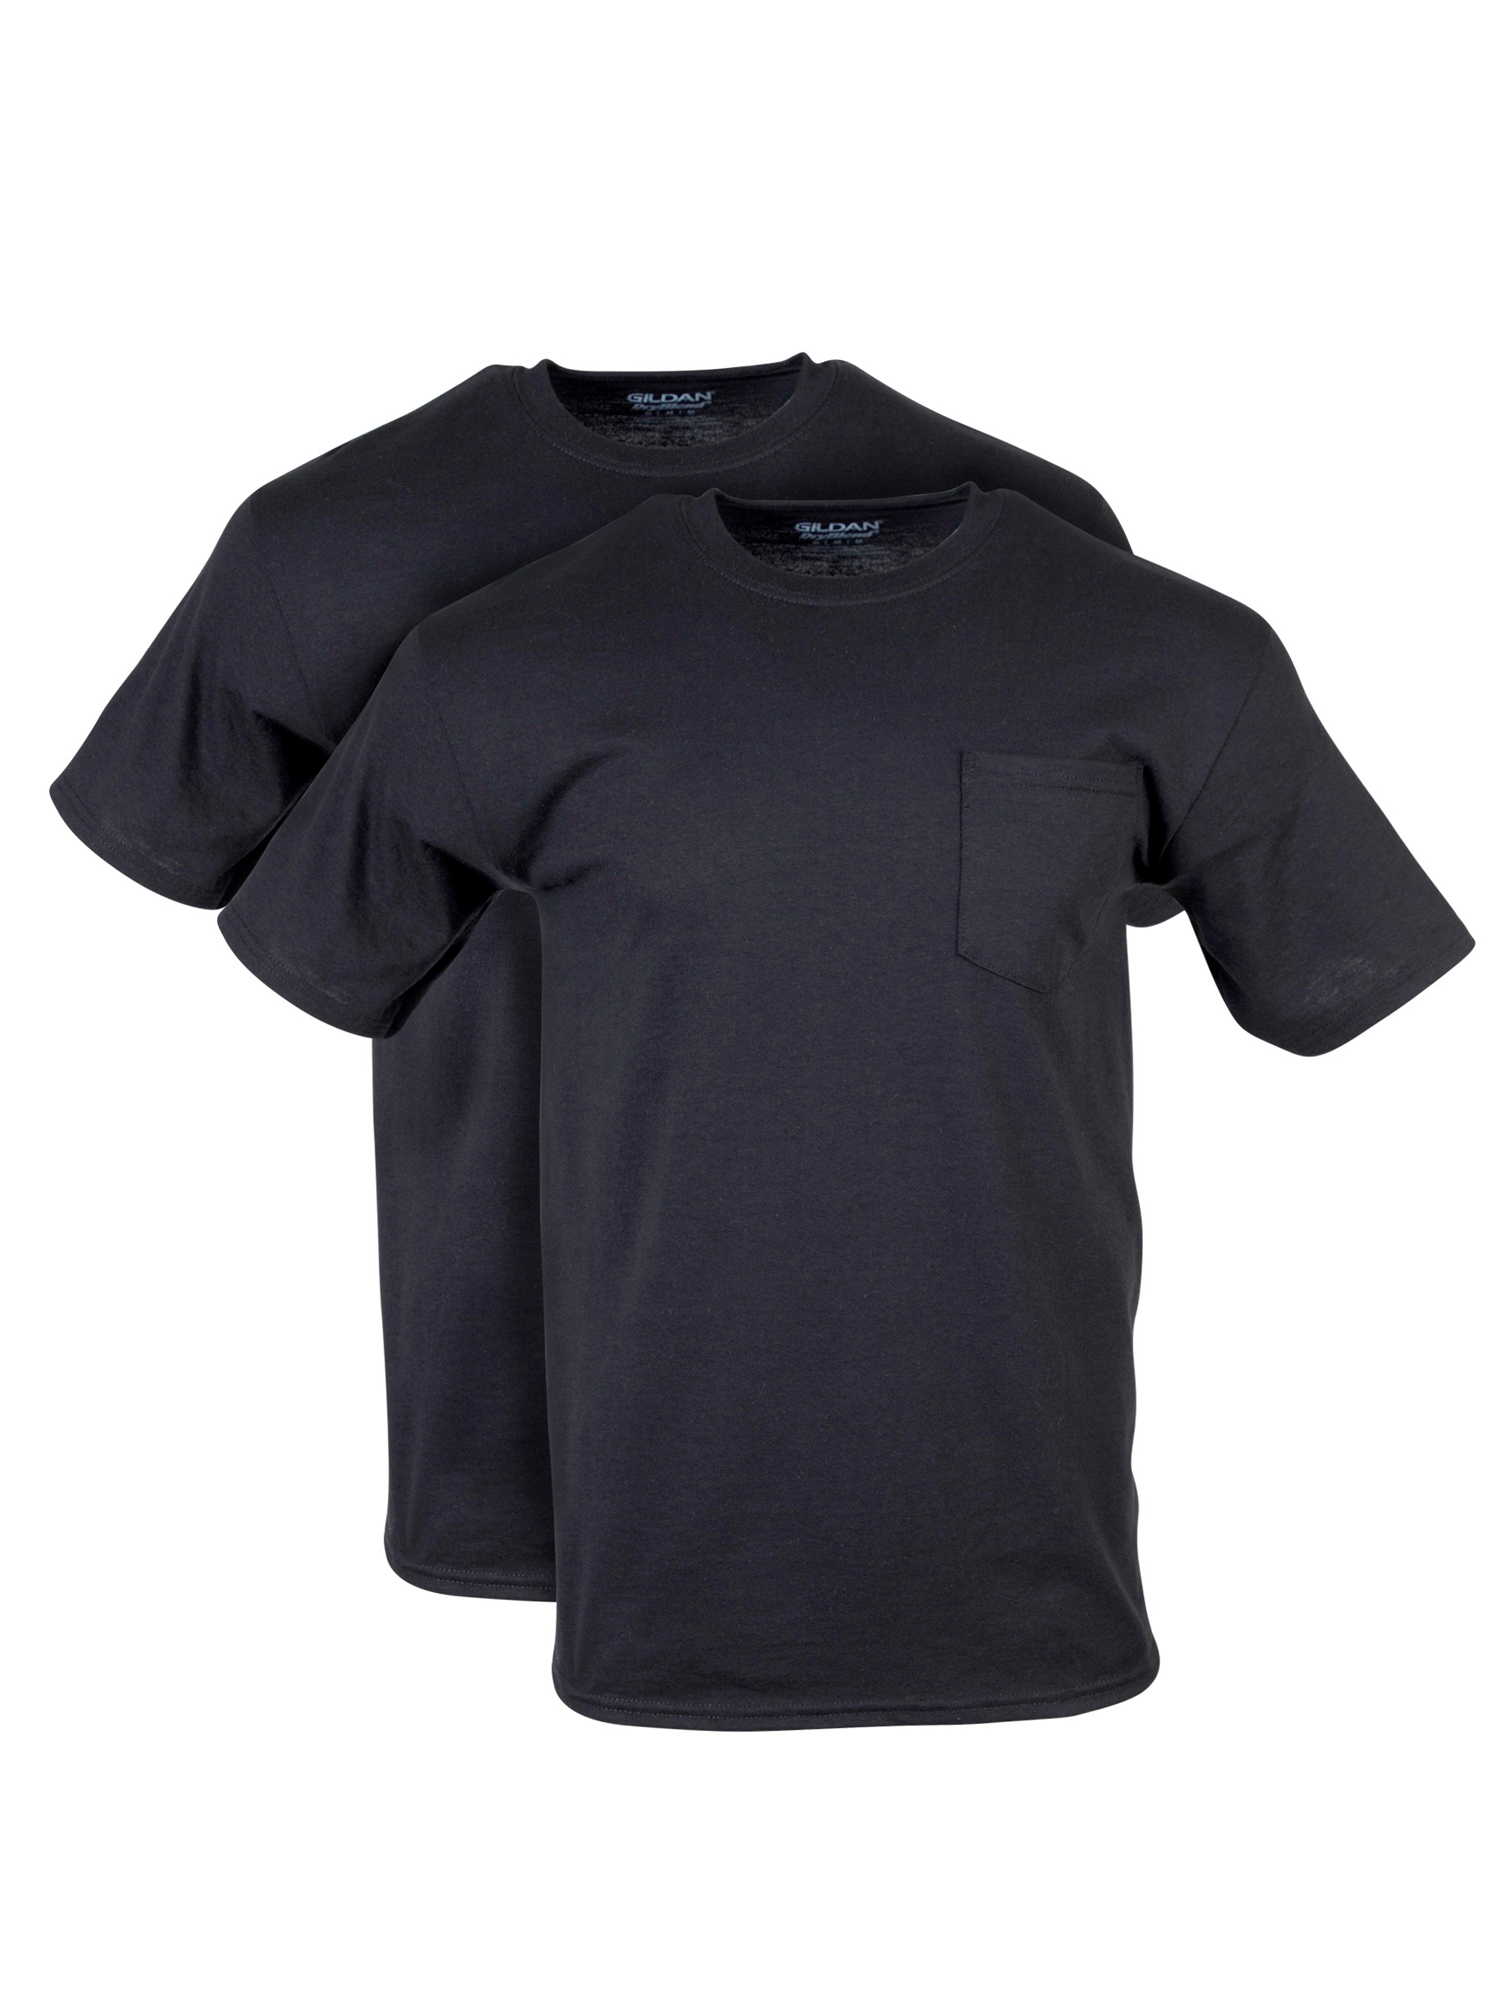 Gildan Adult Men's DryBlend Workwear T-Shirts with Pocket, 2-Pack, Sizes S-2XL  - Walmart.com